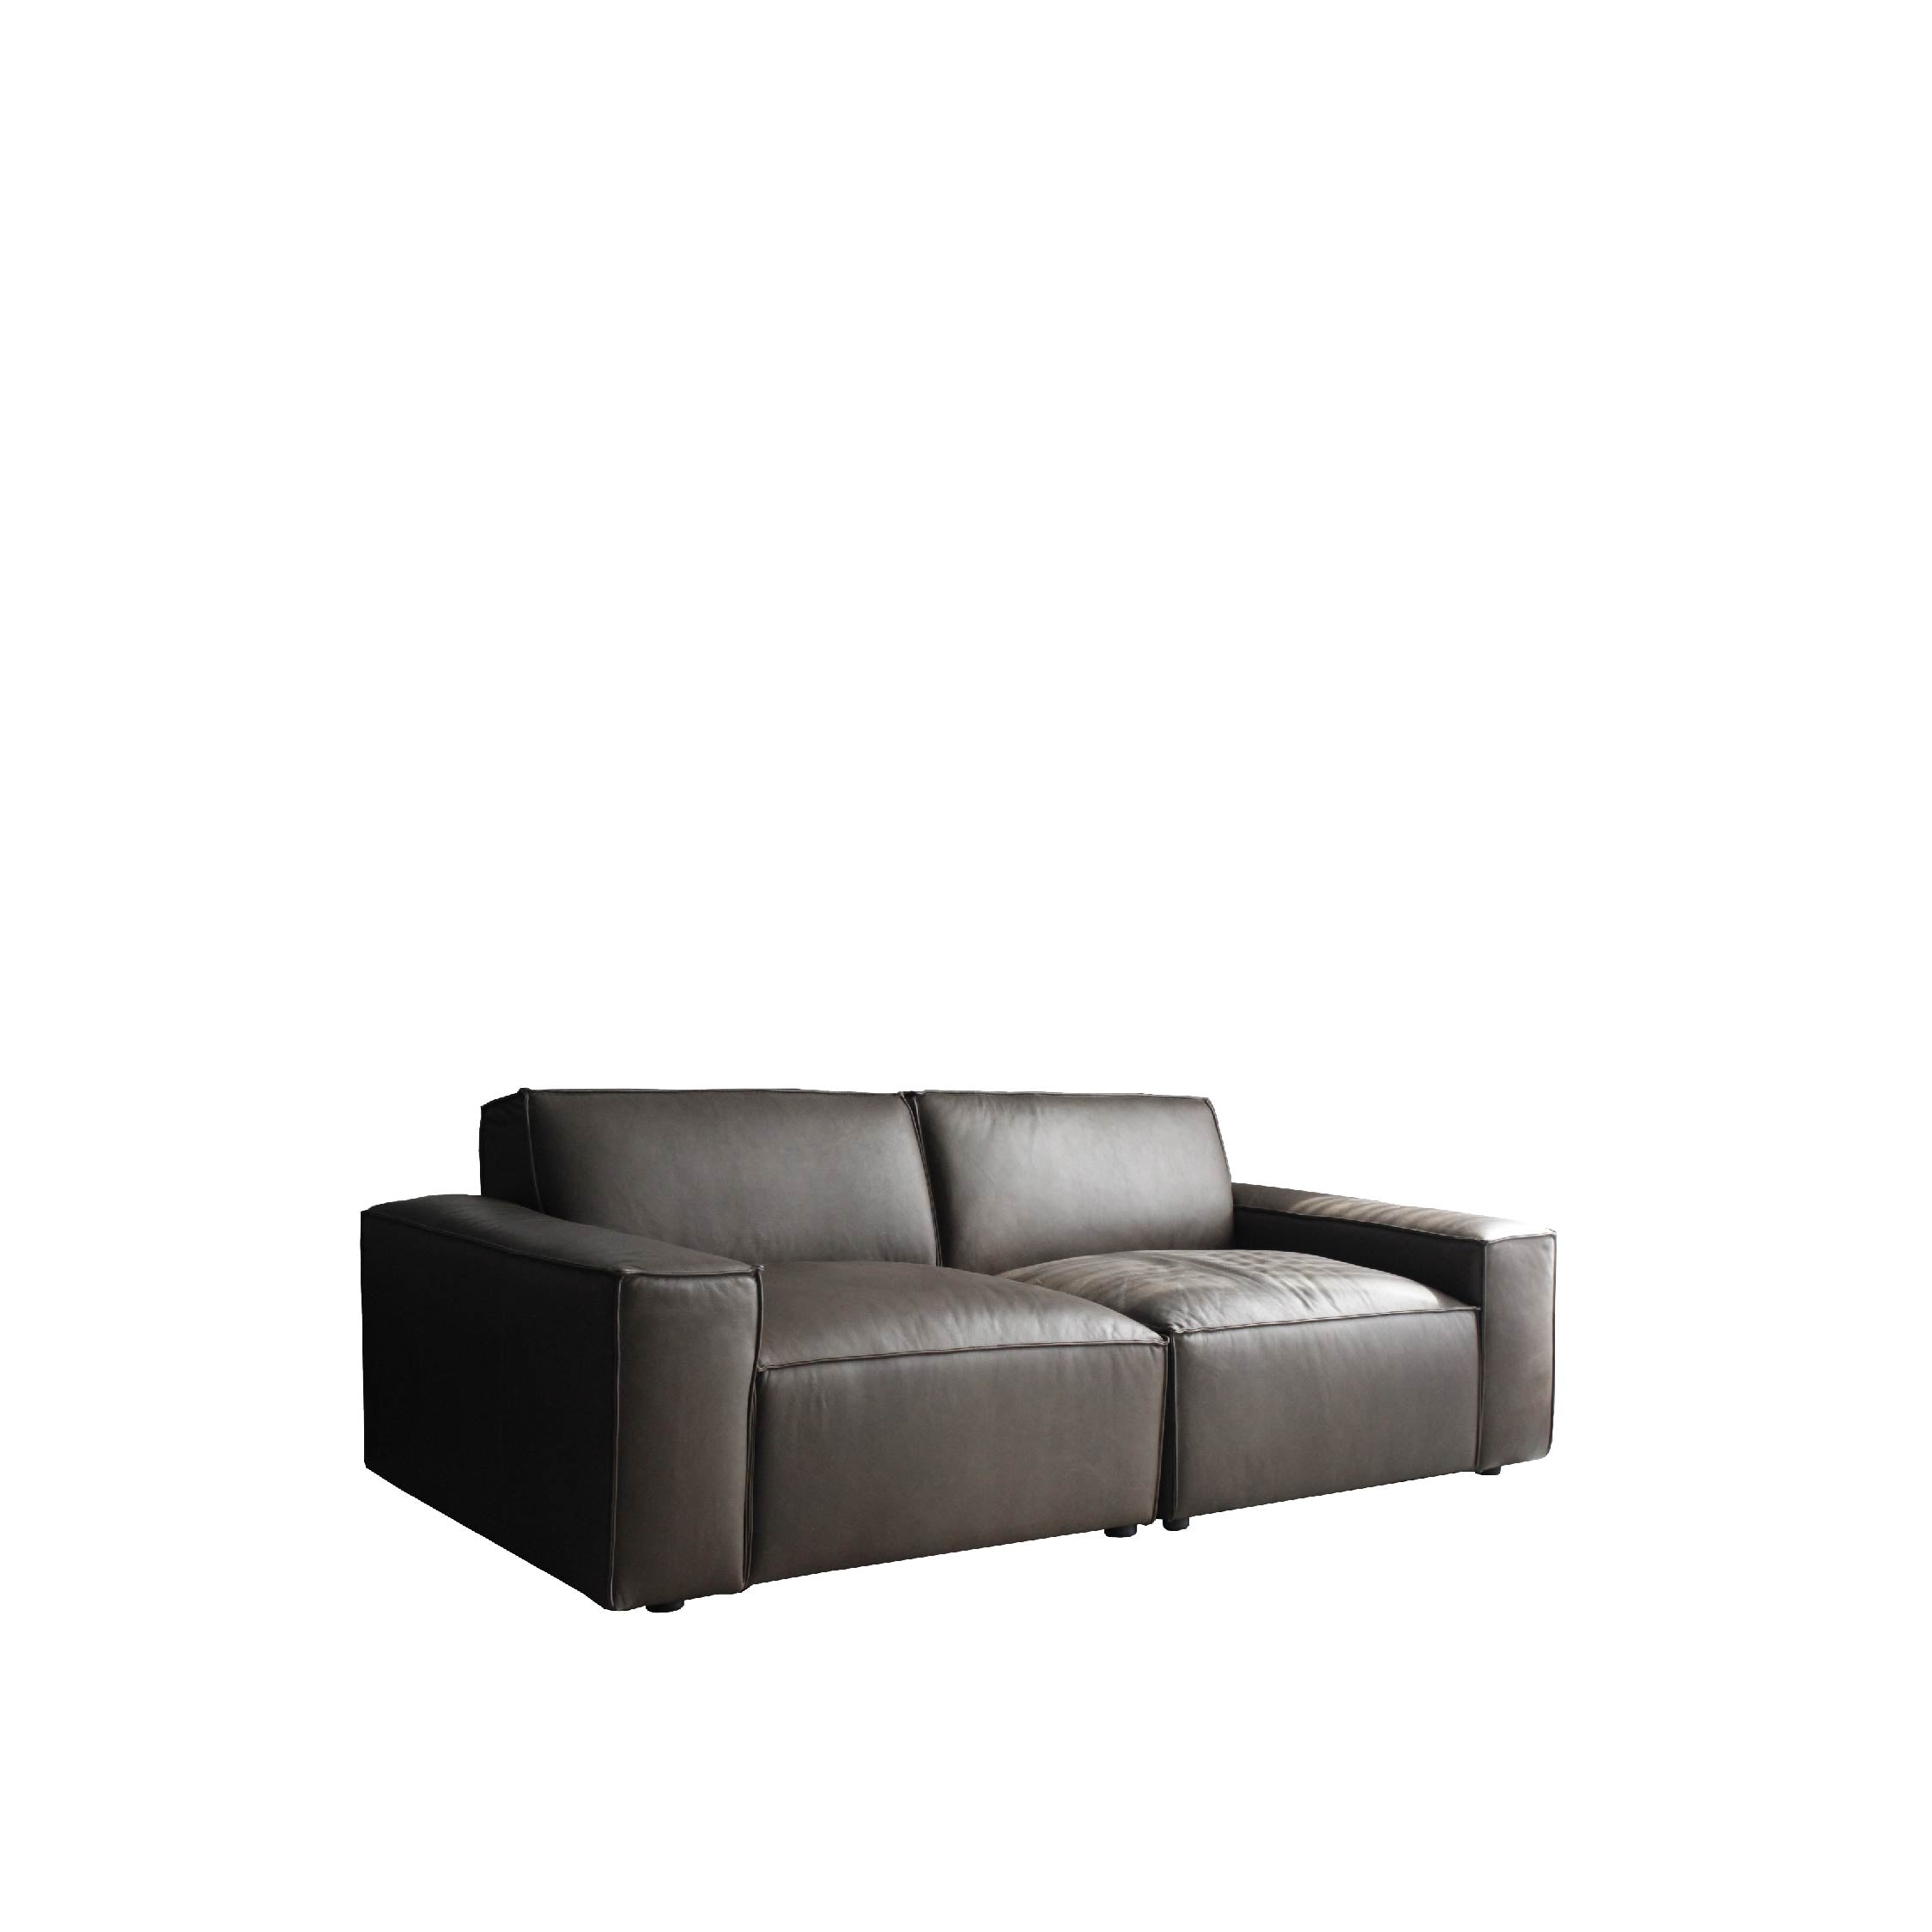 ESSIMETRI Sofa 3 Seater Taupe Leather Exhibit Sale at Seremban 2 Offline Store